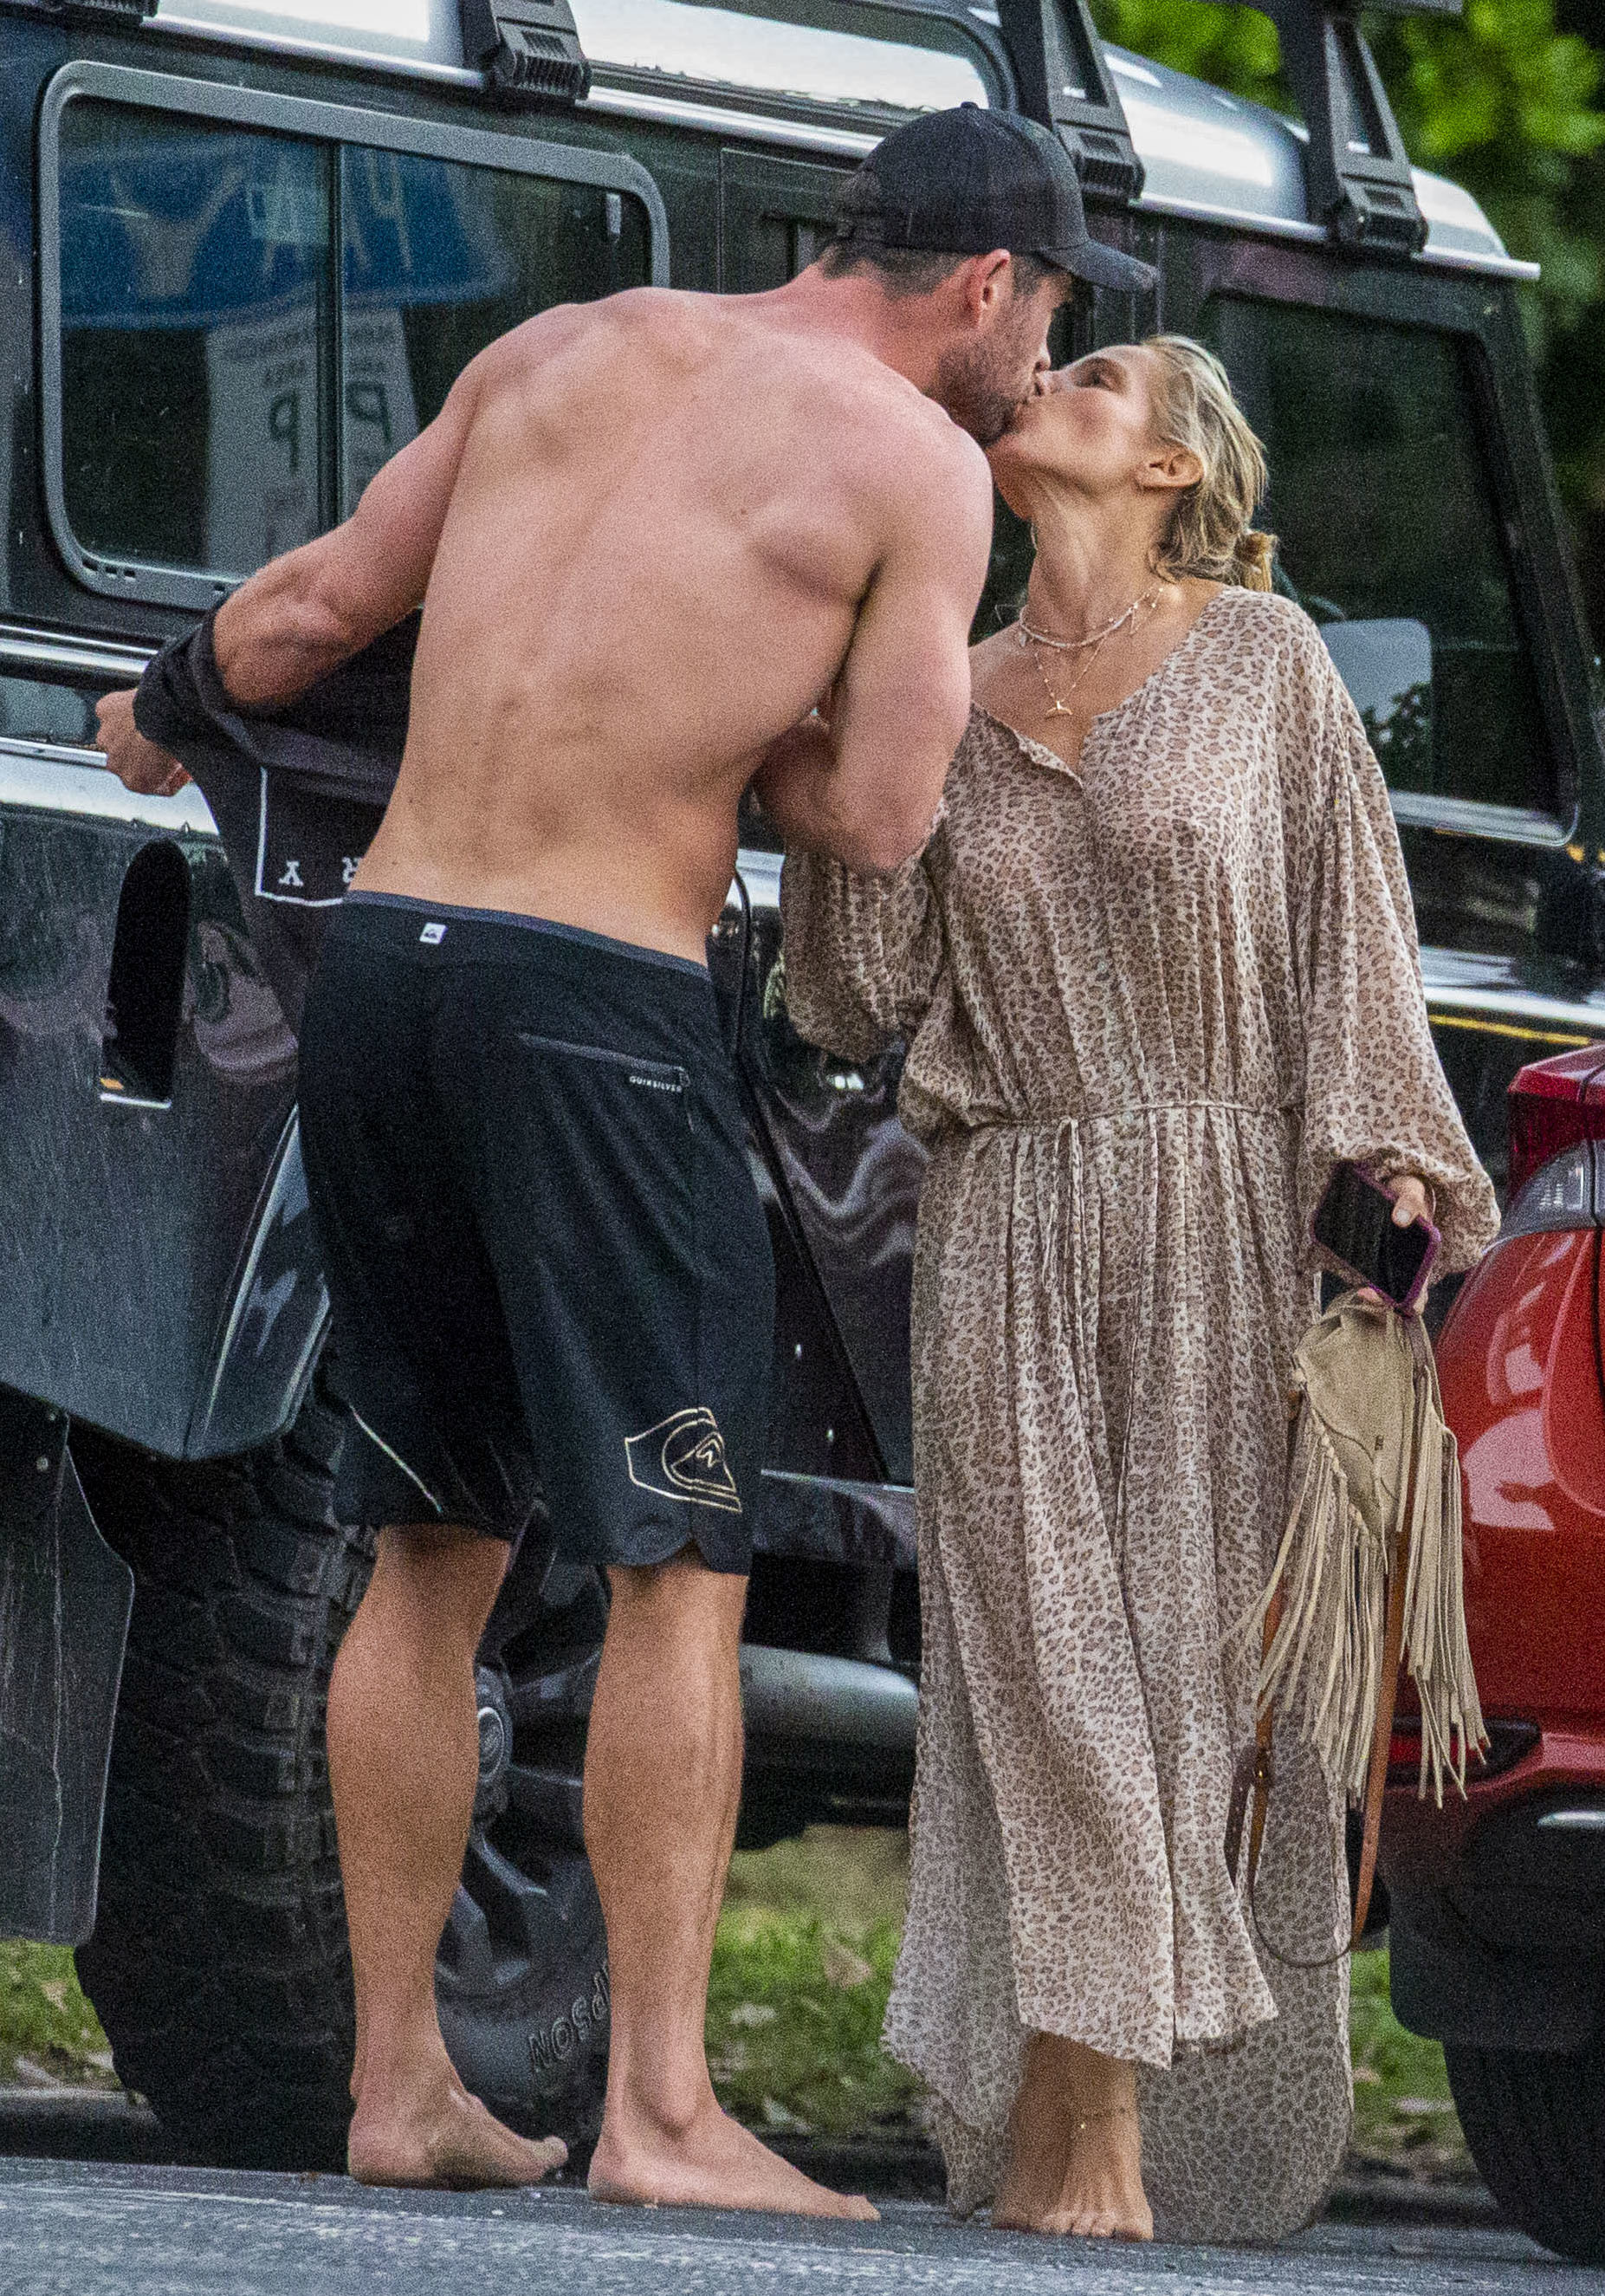 Chris Hemsworth Elsa Pataky kiss beach - Celebrity PDA of 2019 | Gallery | Wonderwall.com